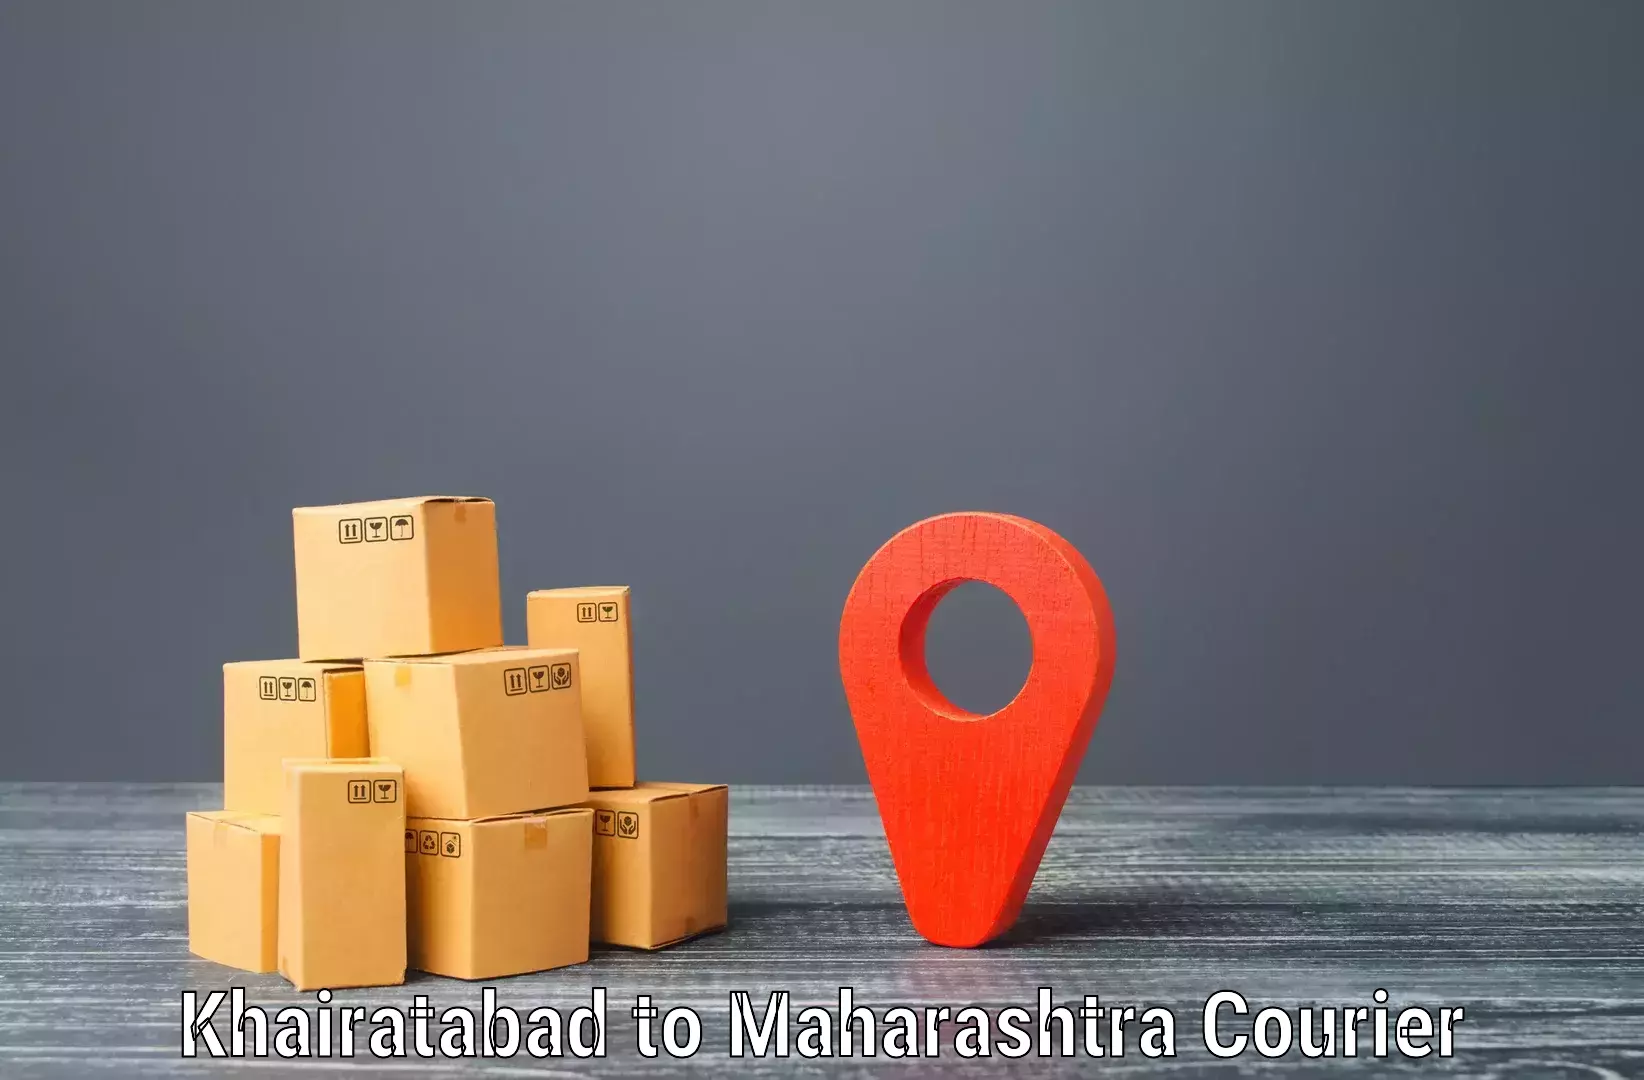 Flexible delivery schedules Khairatabad to IIT Mumbai